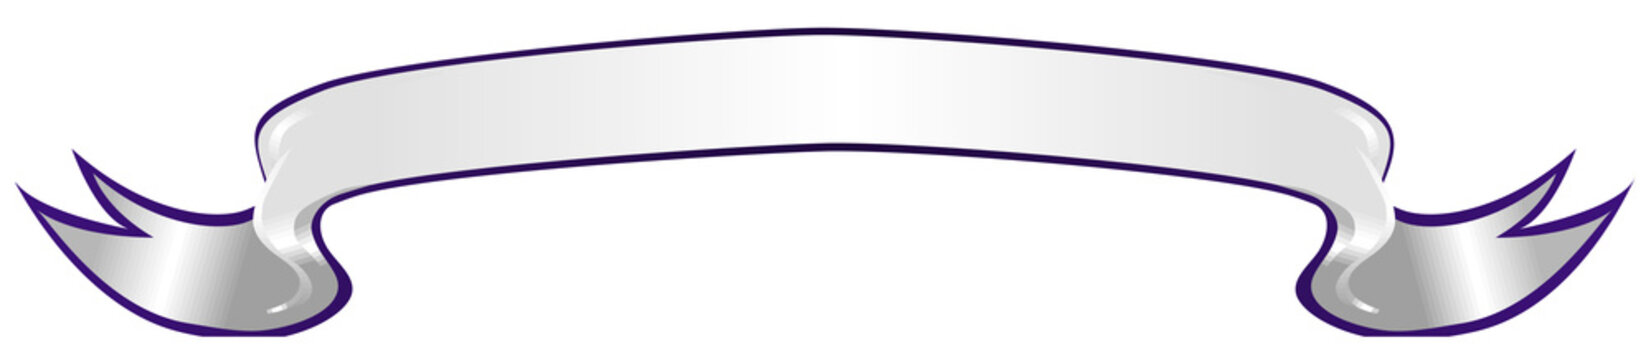 an illustration of a  white ribbon border